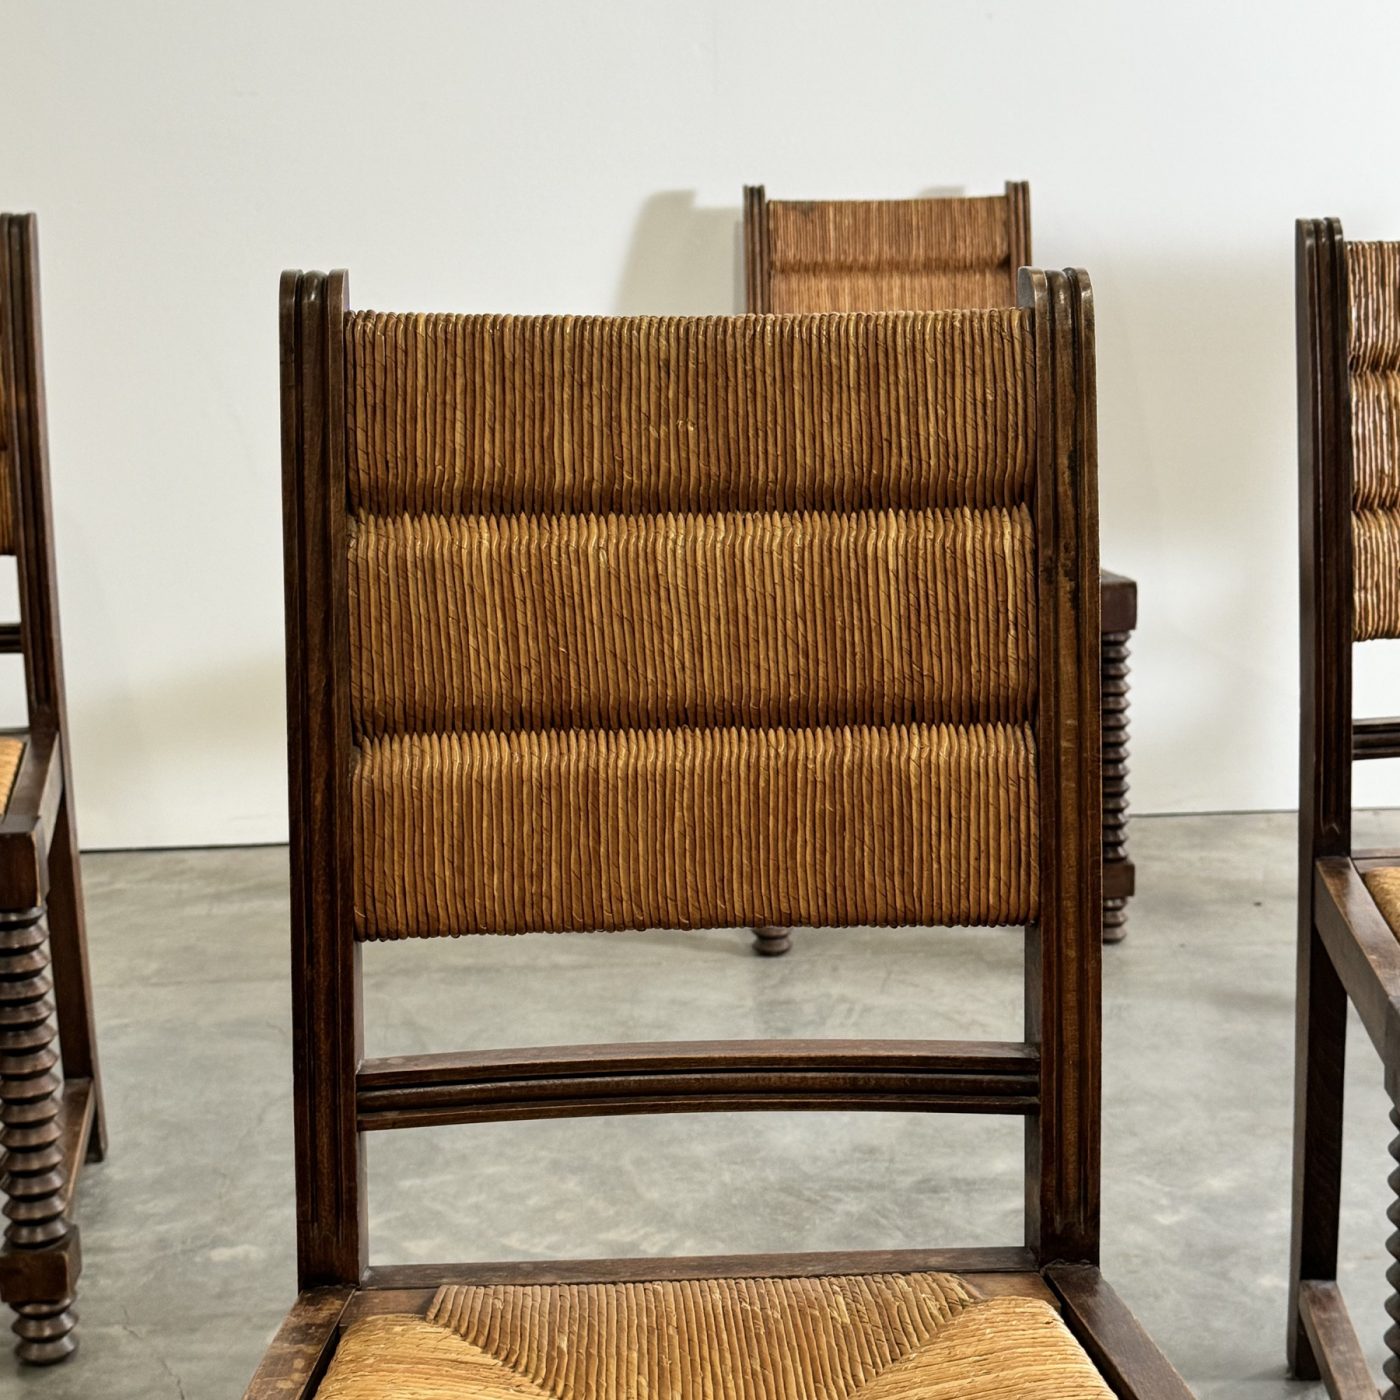 objet-vagabond-midcentury-chairs0001